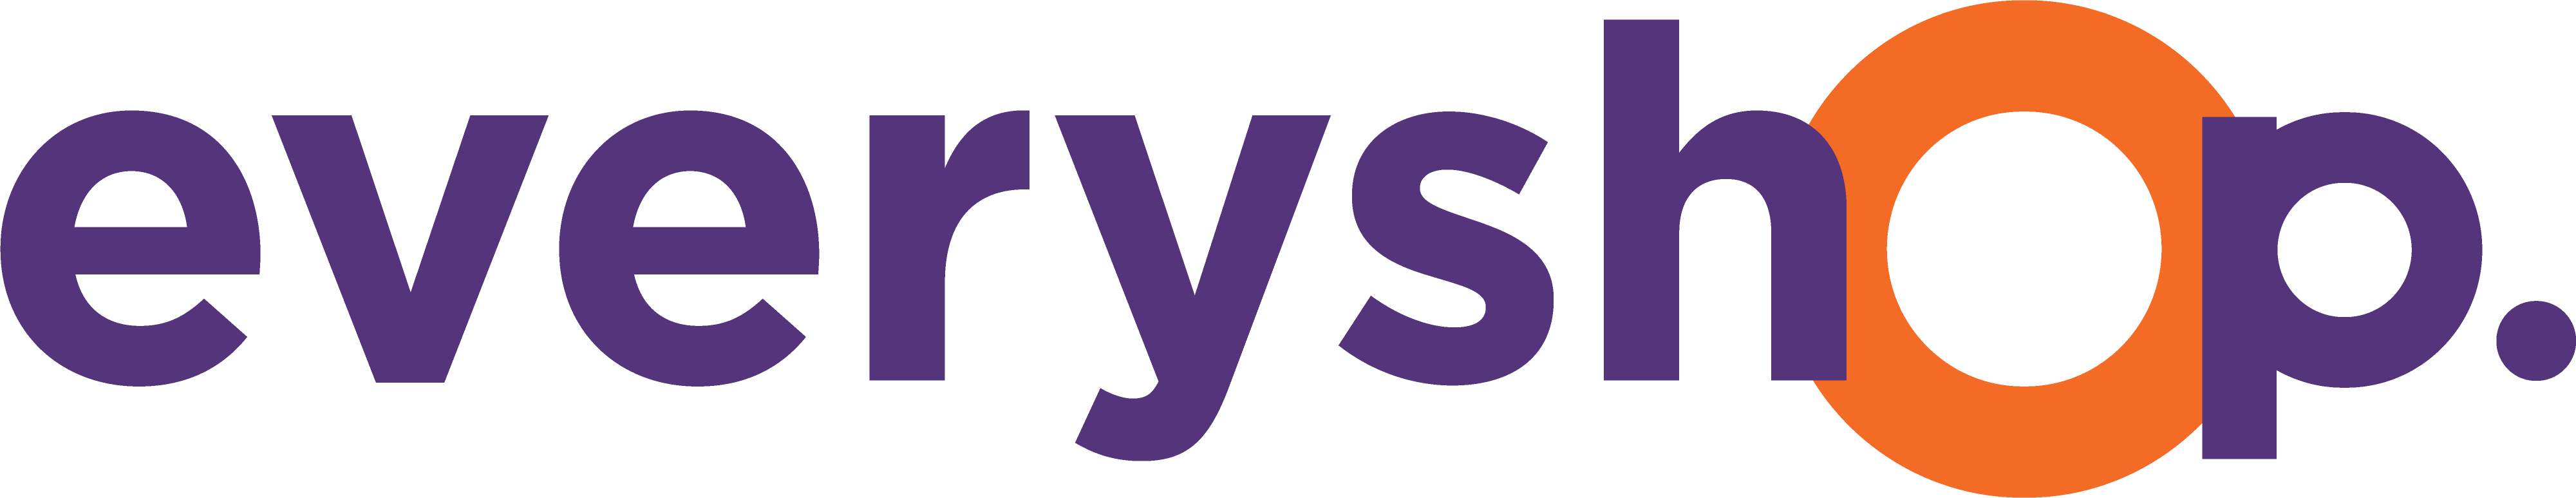 Everyshop Logo